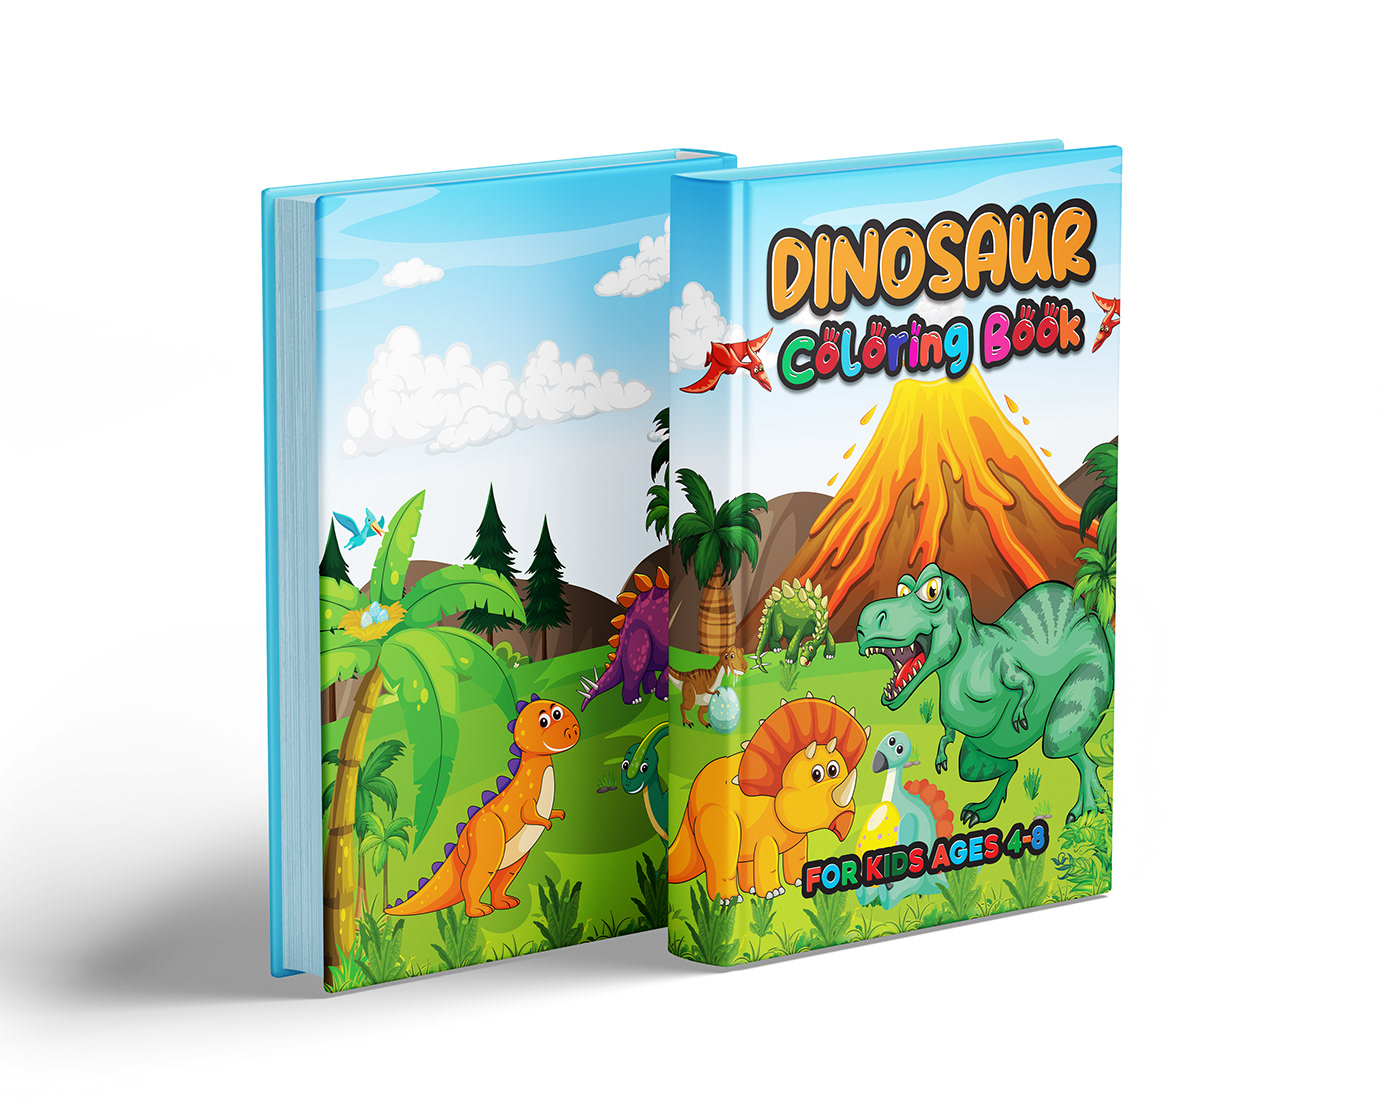 book cover colouring book children's book colorbook Amazon kdp Book Cover Design kids kids book amazon kdp book cover